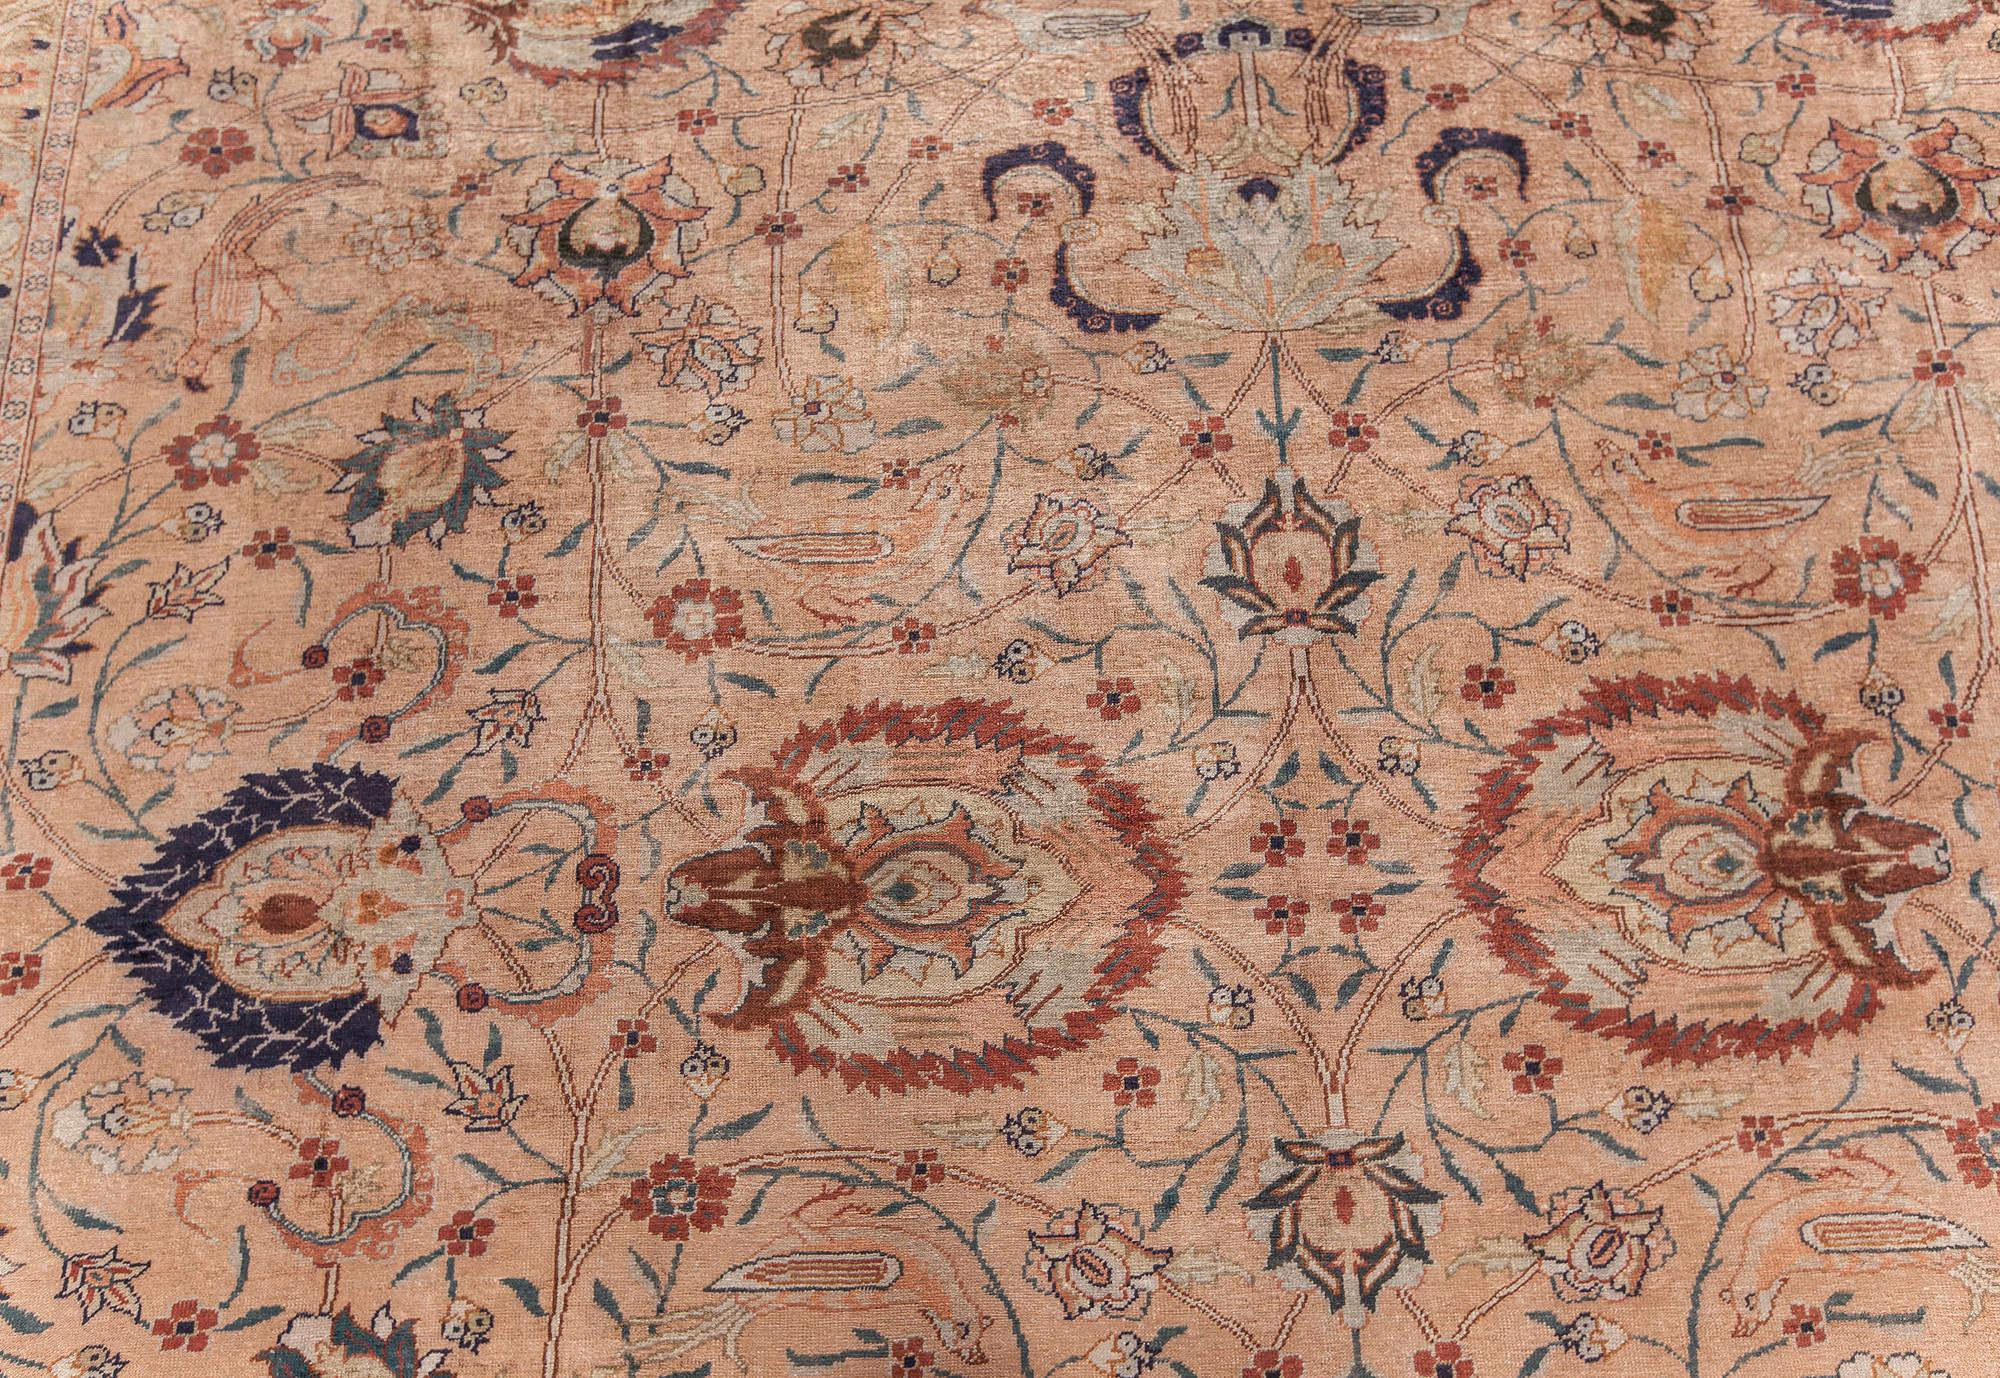 Authentic Persian Tabriz silk rug in blue, brown, green, orange, pink, purple
Size: 9'8